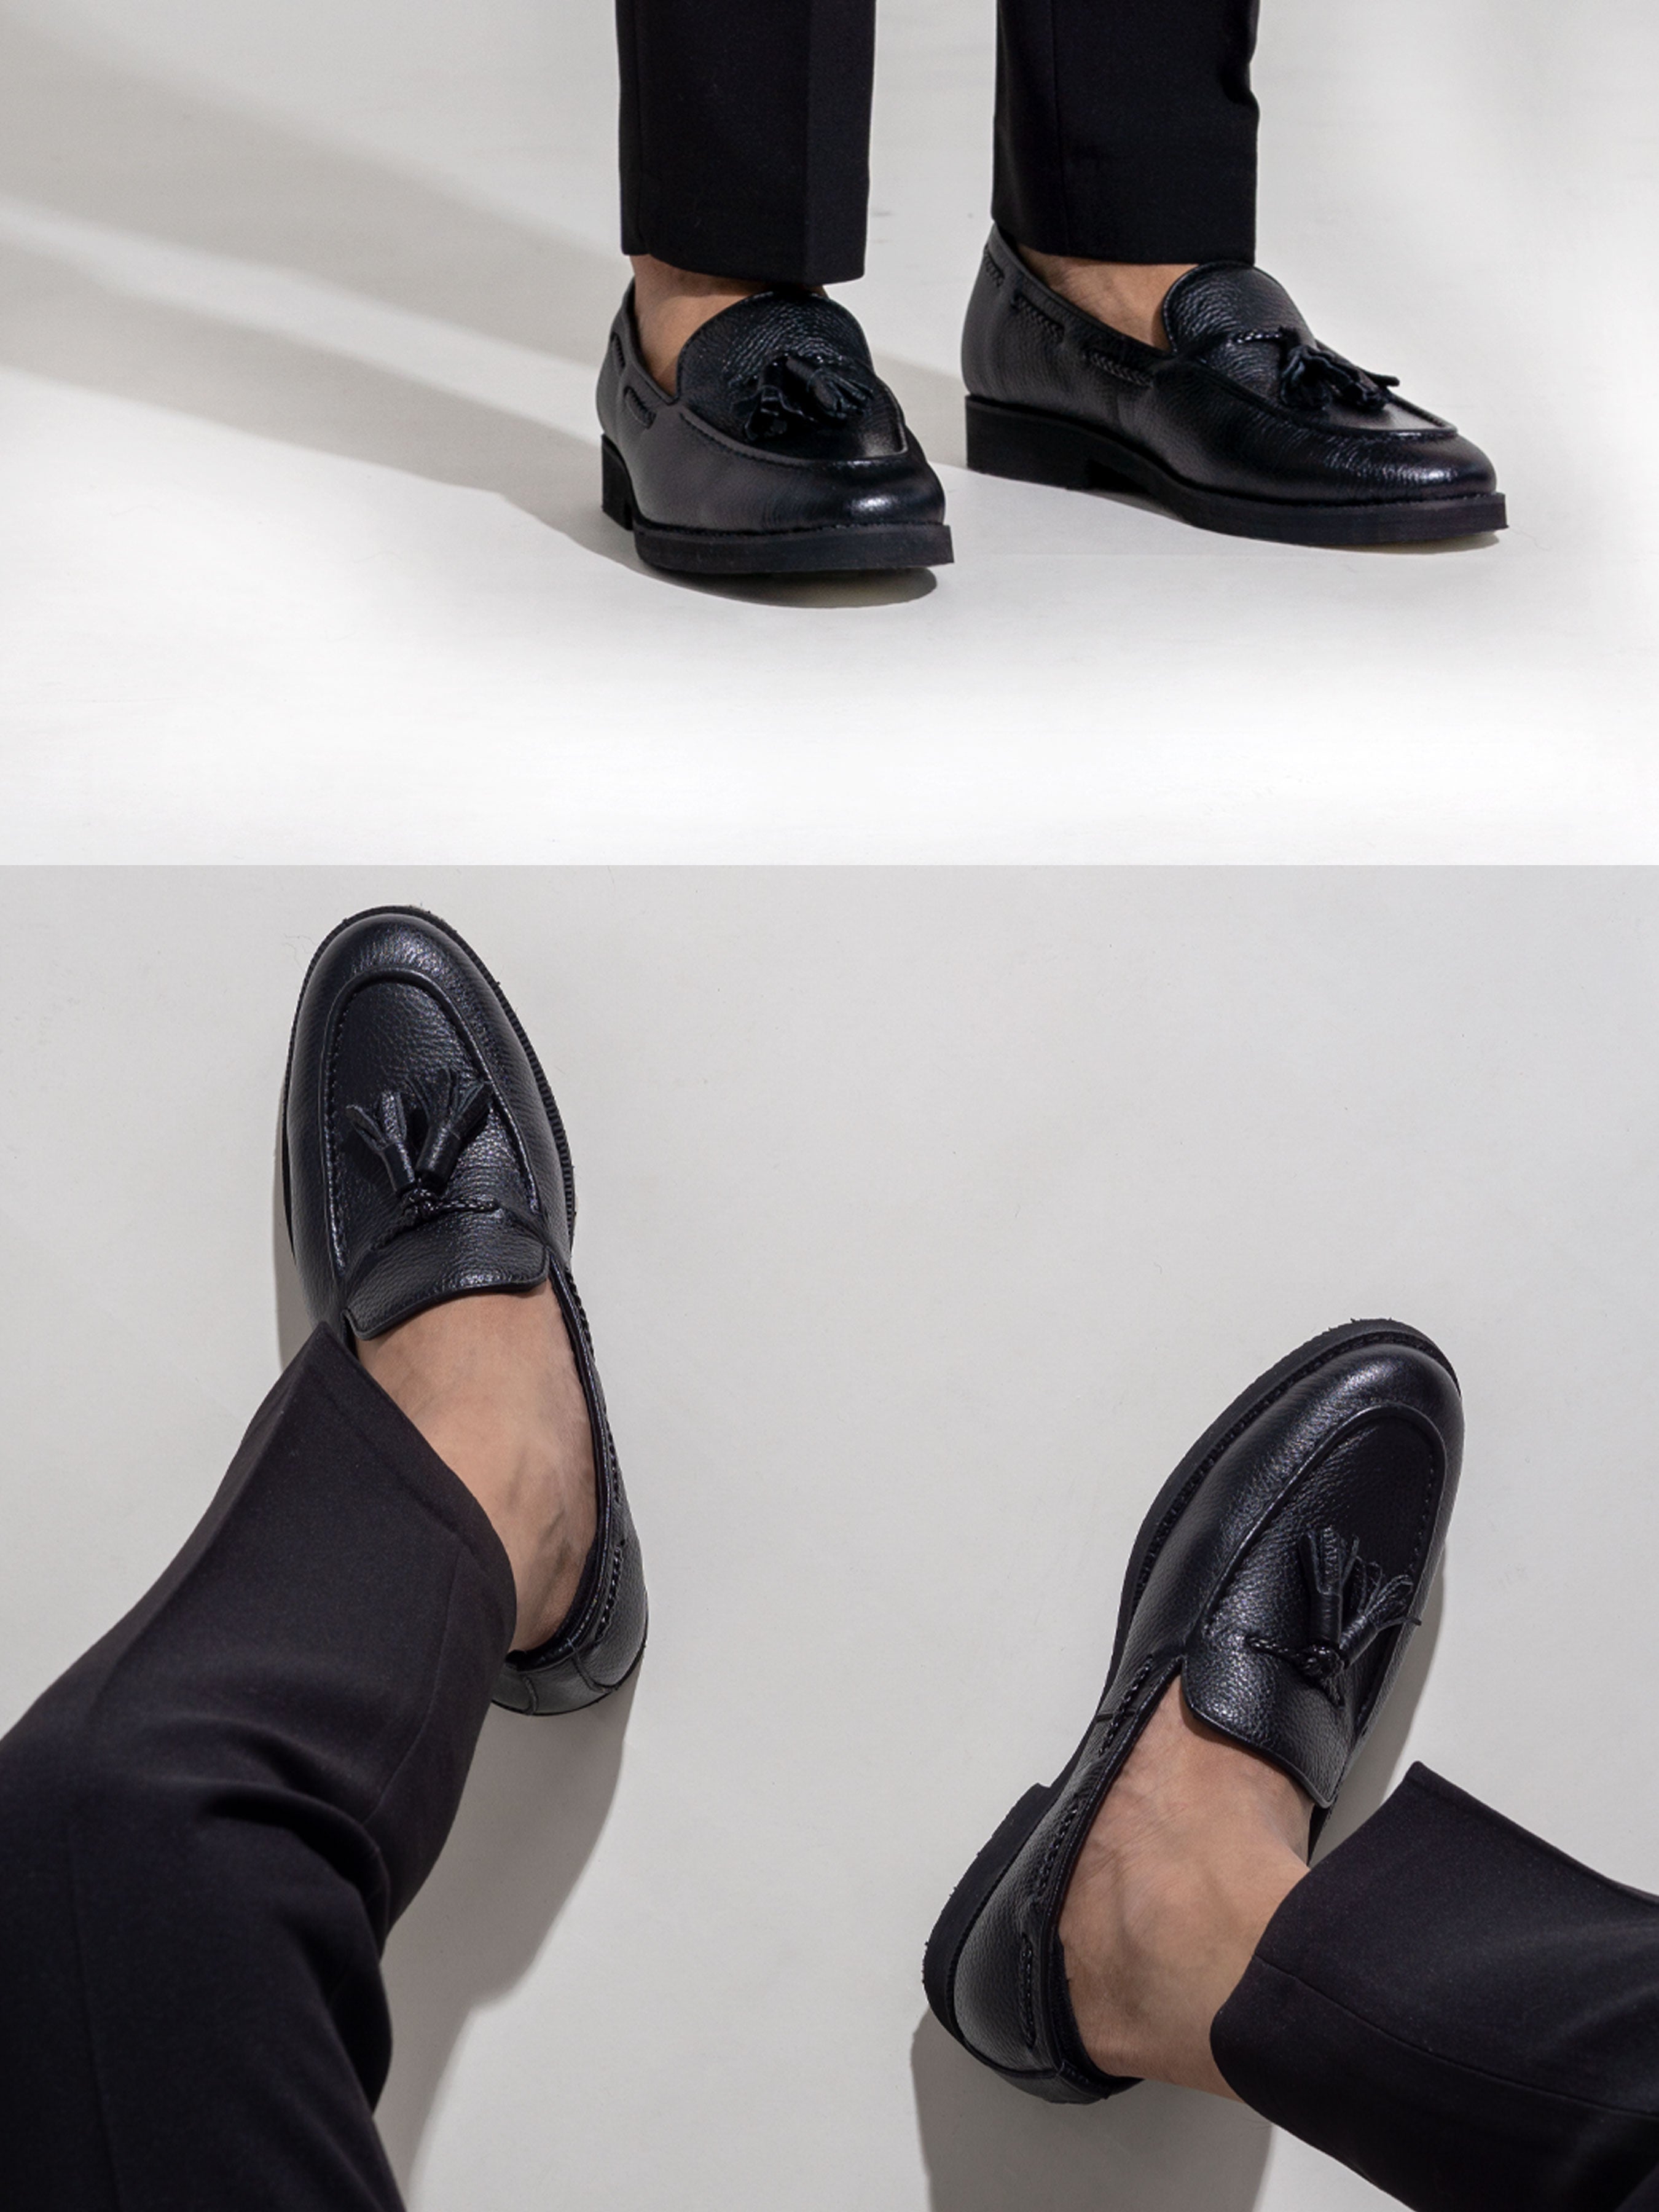 Tassel Loafer - Black Pebble Grain Leather (Crepe Sole) - Zeve Shoes